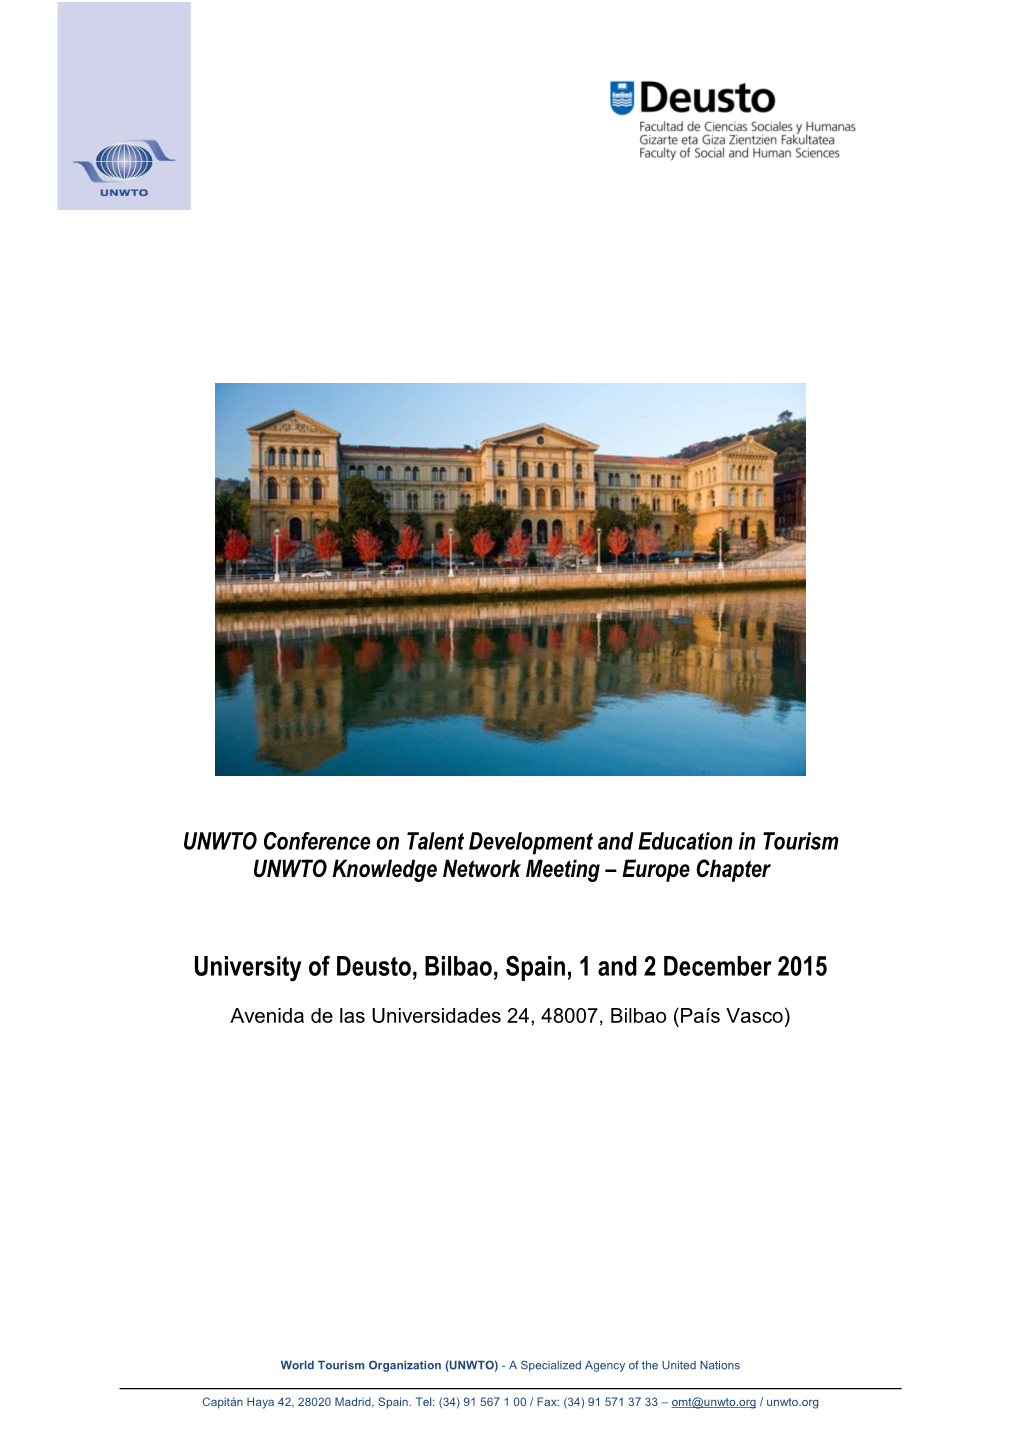 University of Deusto, Bilbao, Spain, 1 and 2 December 2015